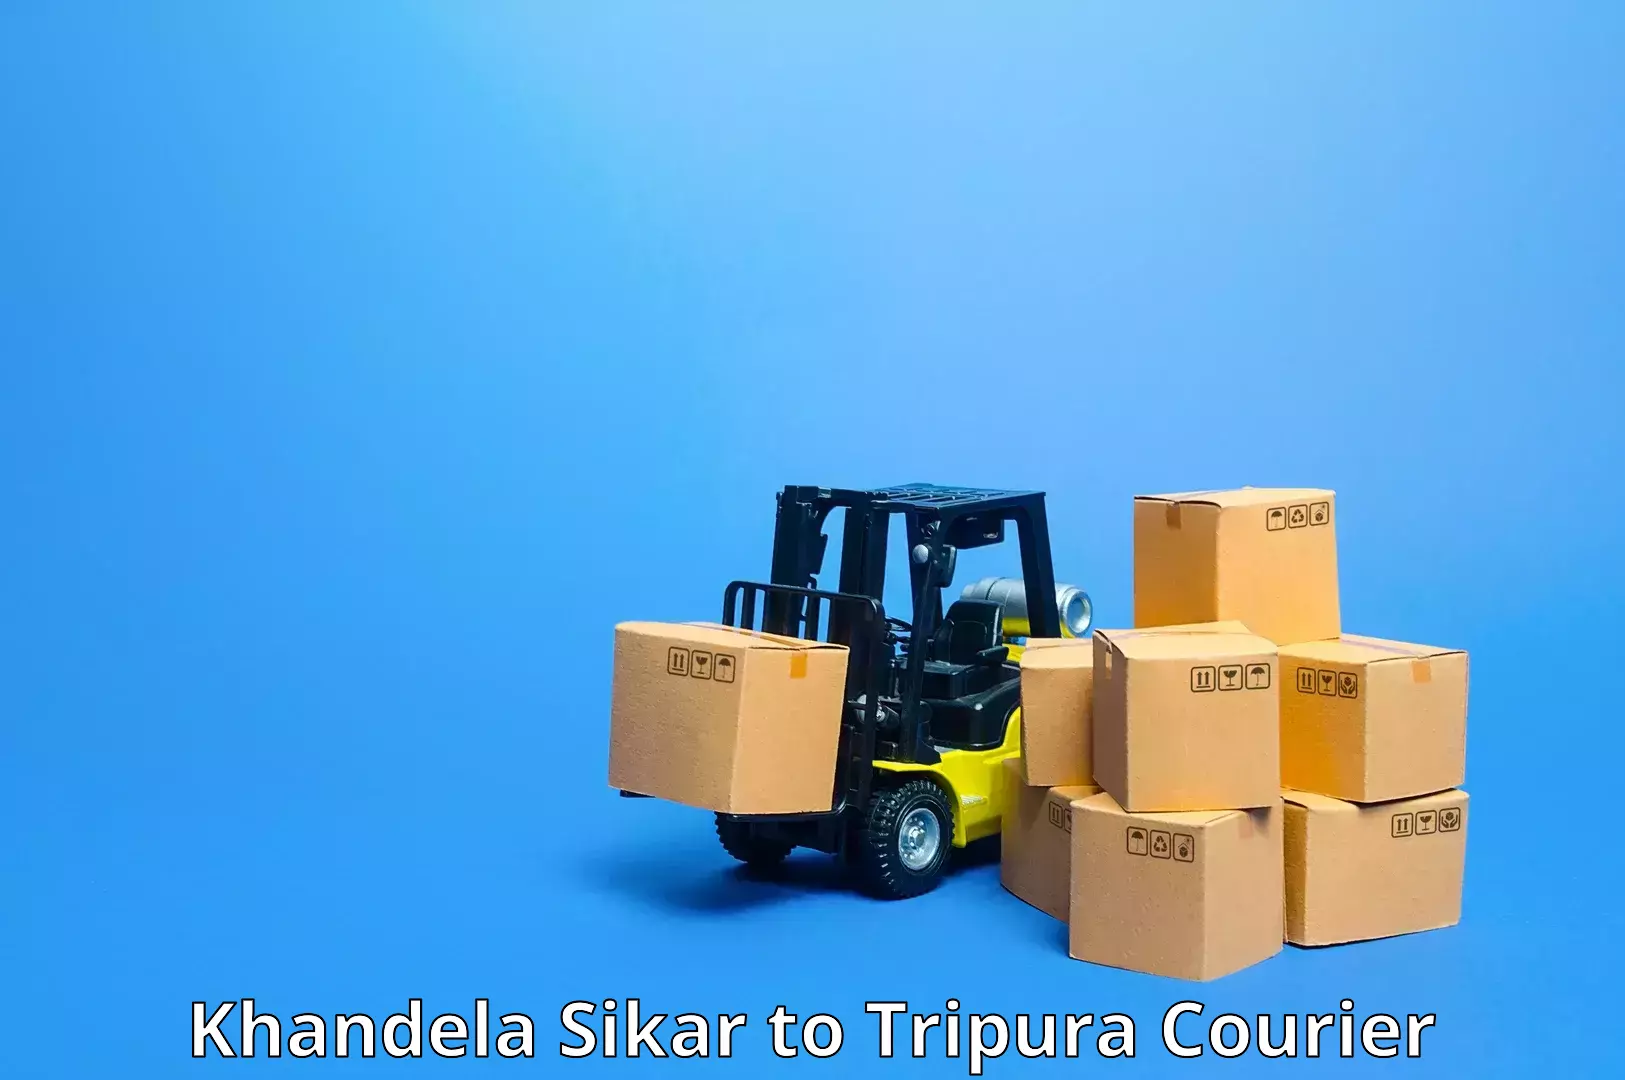 Advanced shipping services Khandela Sikar to Udaipur Tripura